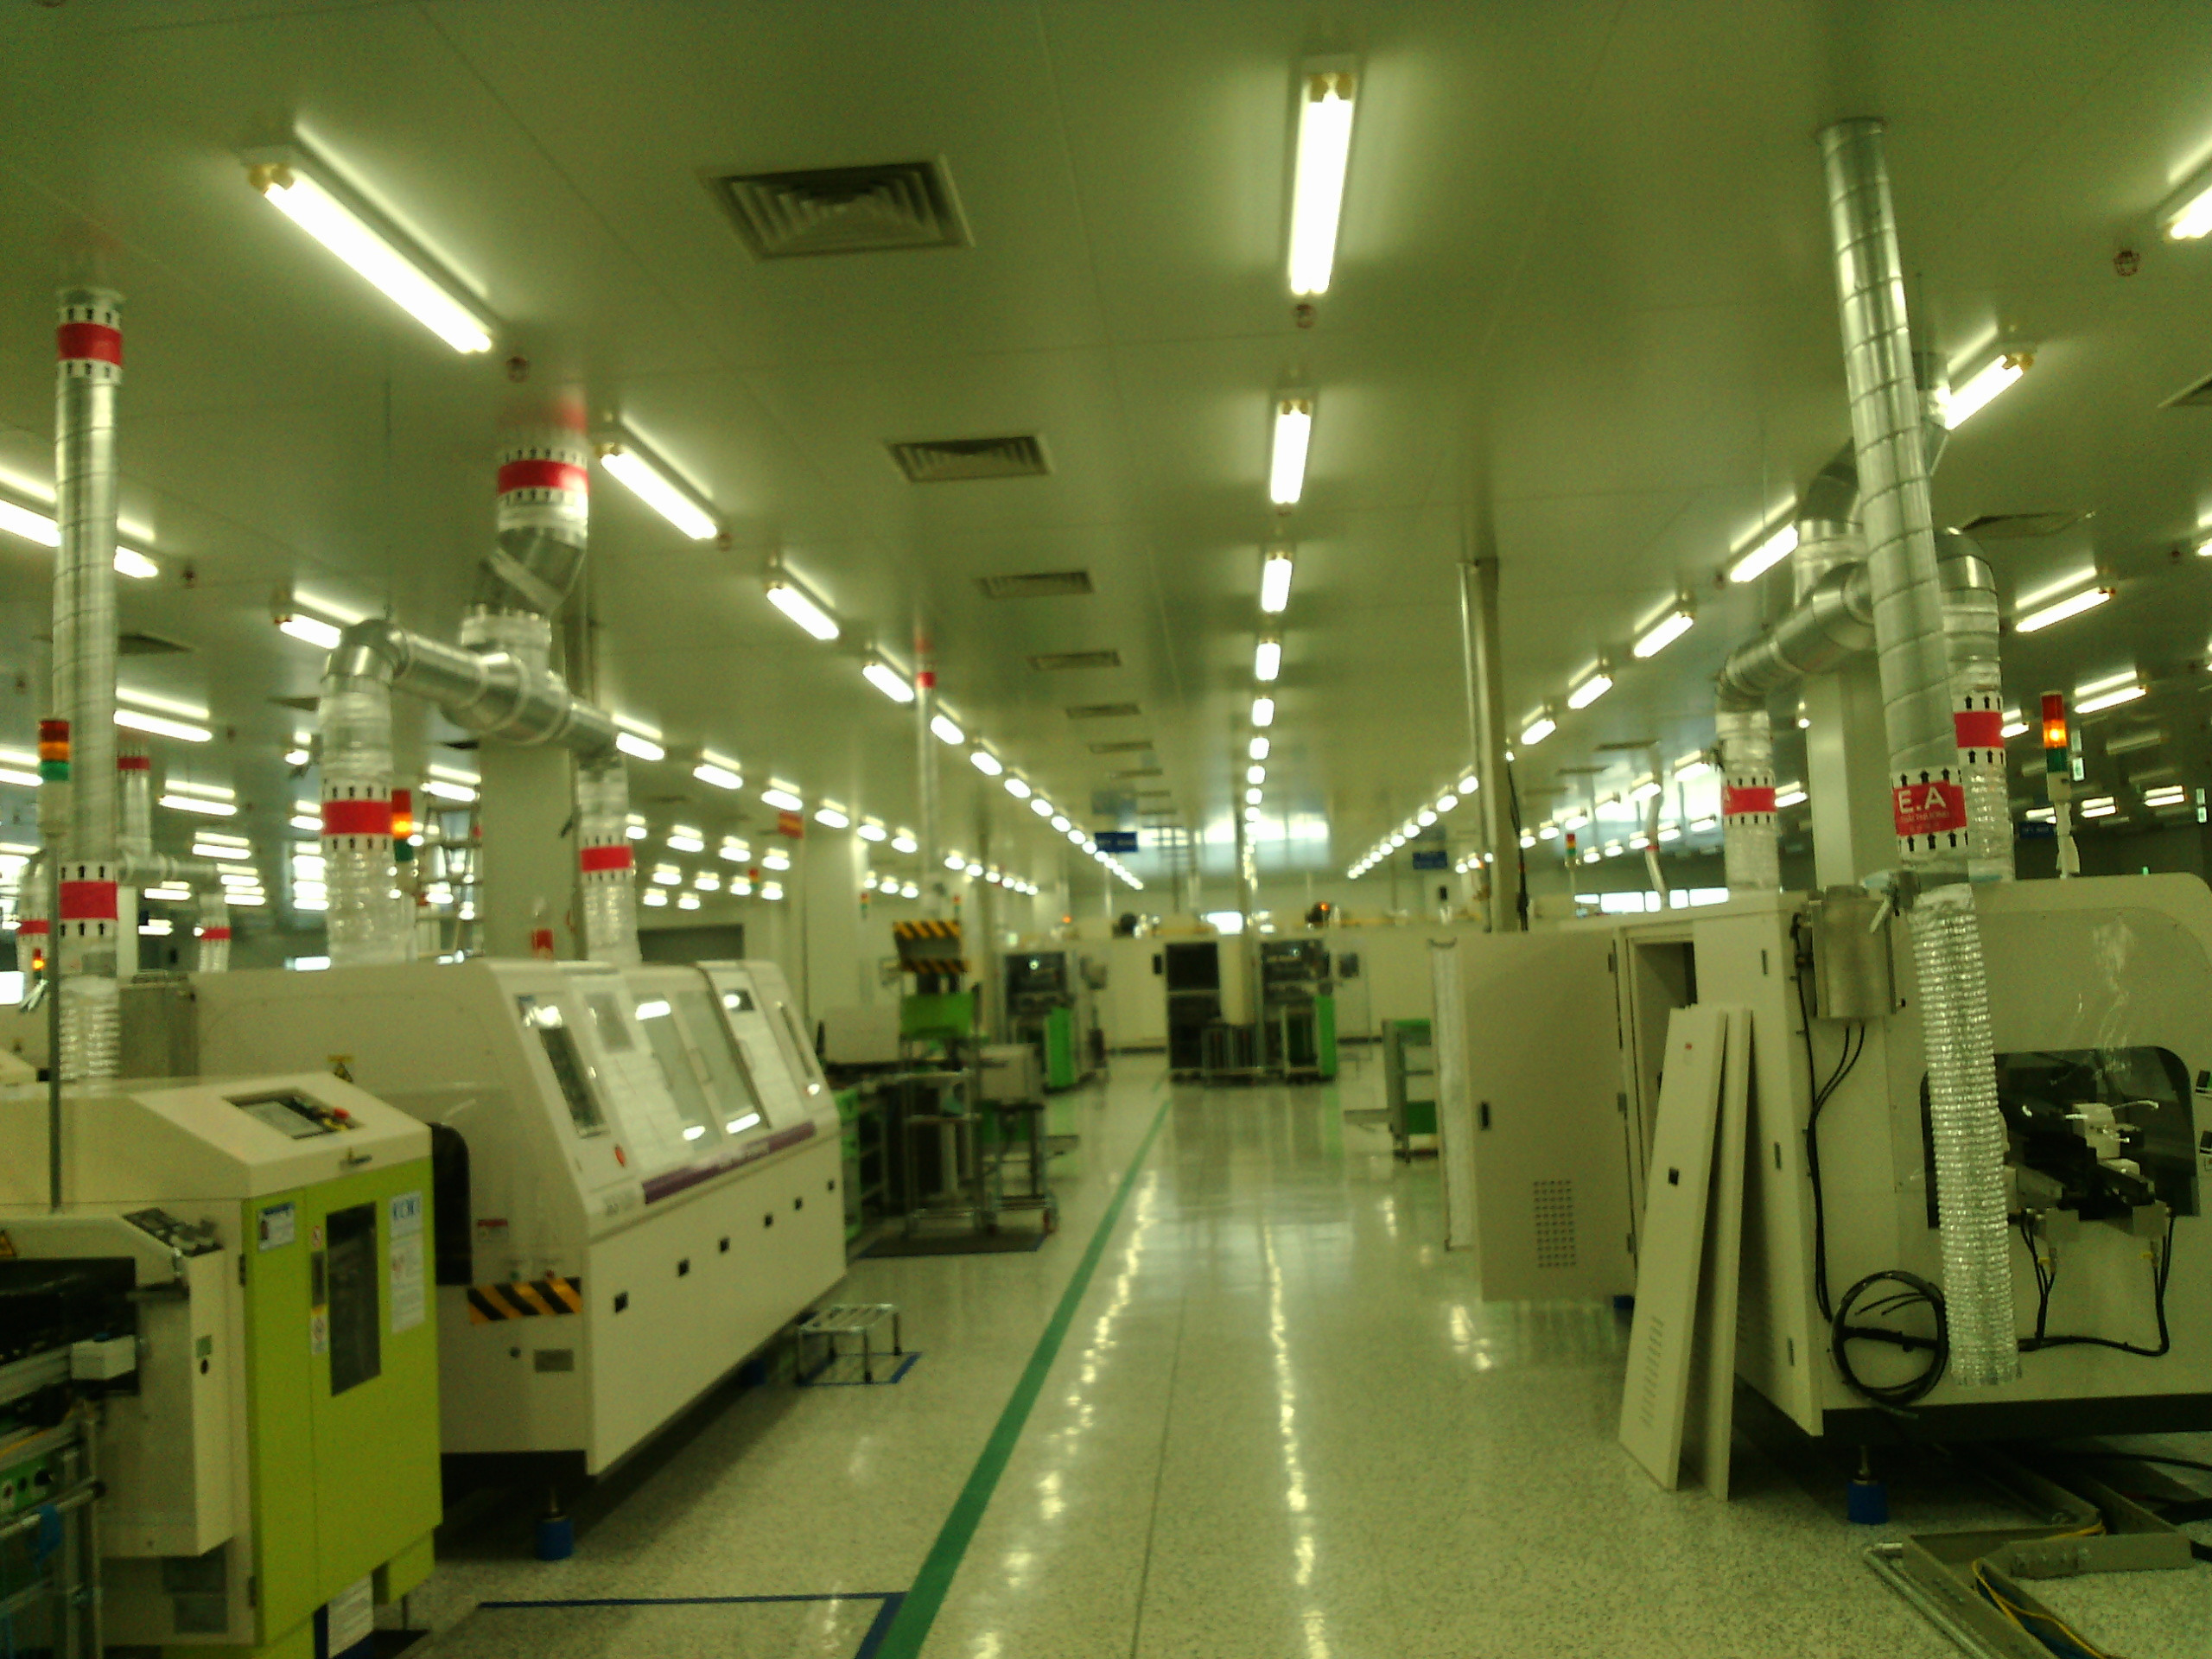 Samsung Electronics HCMC CE Complex (SEHC)